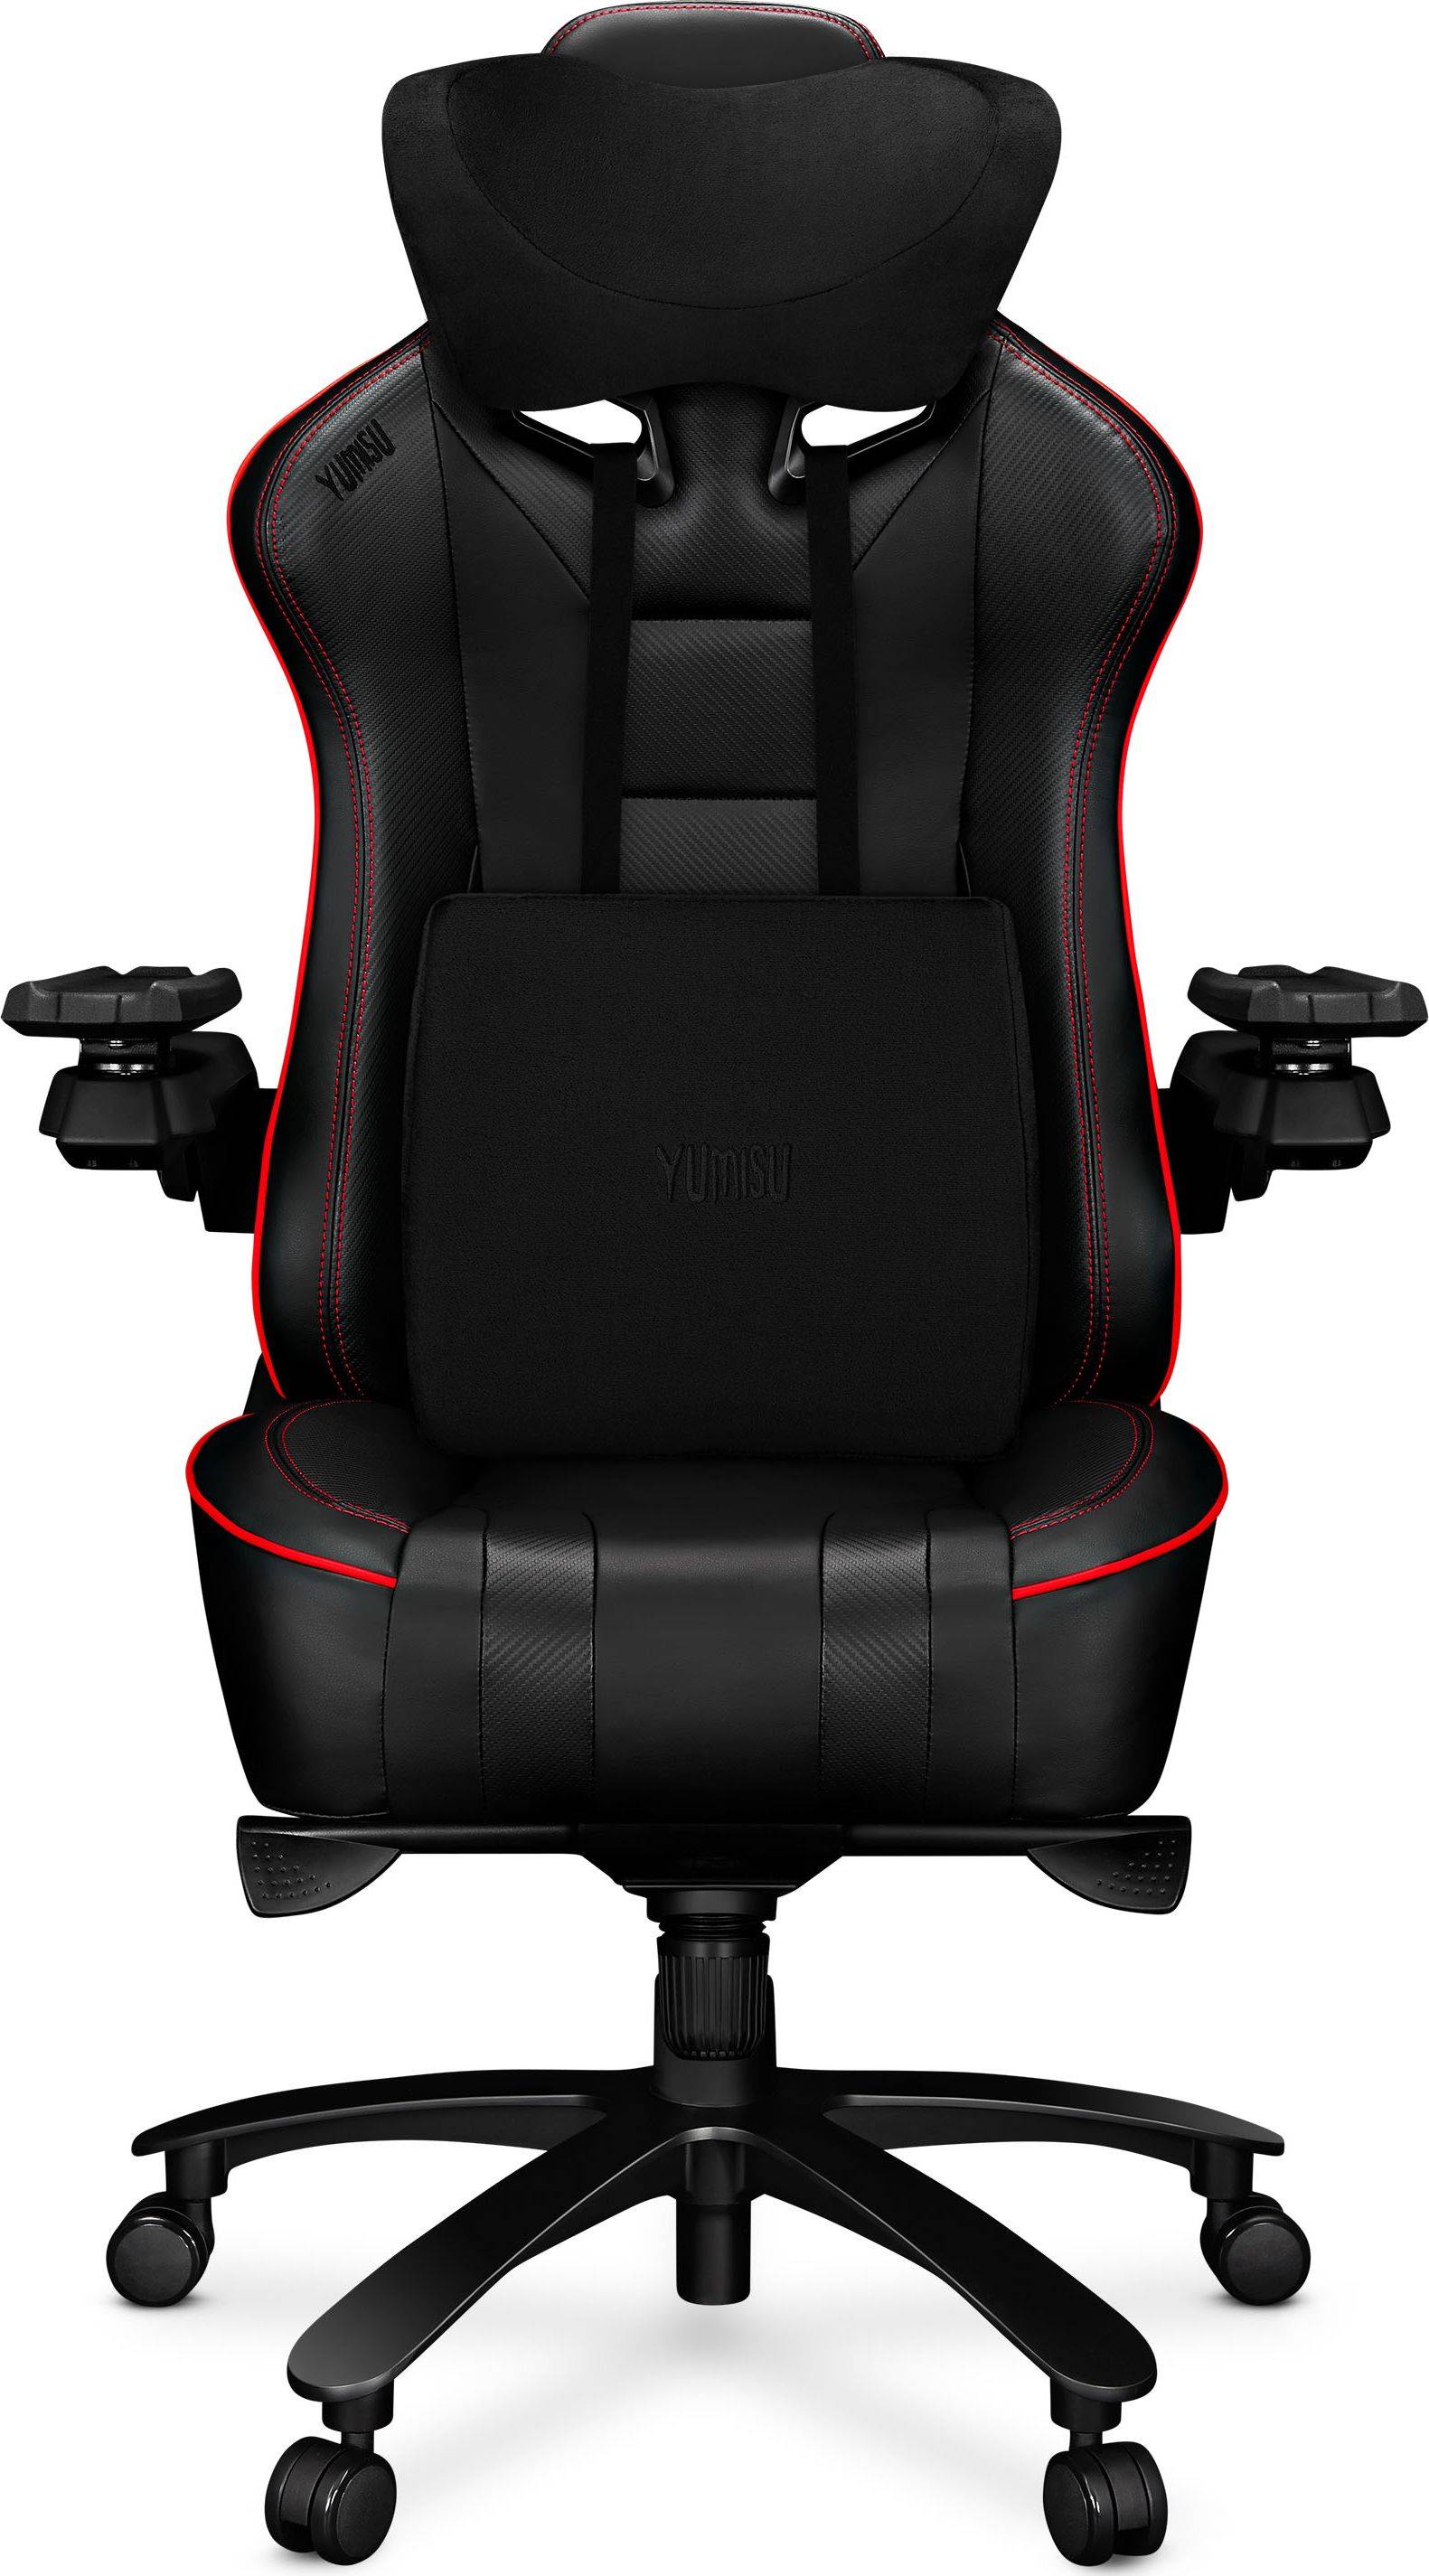  Bild på Yumisu 2049 Gaming Chair - Black/Red gamingstol